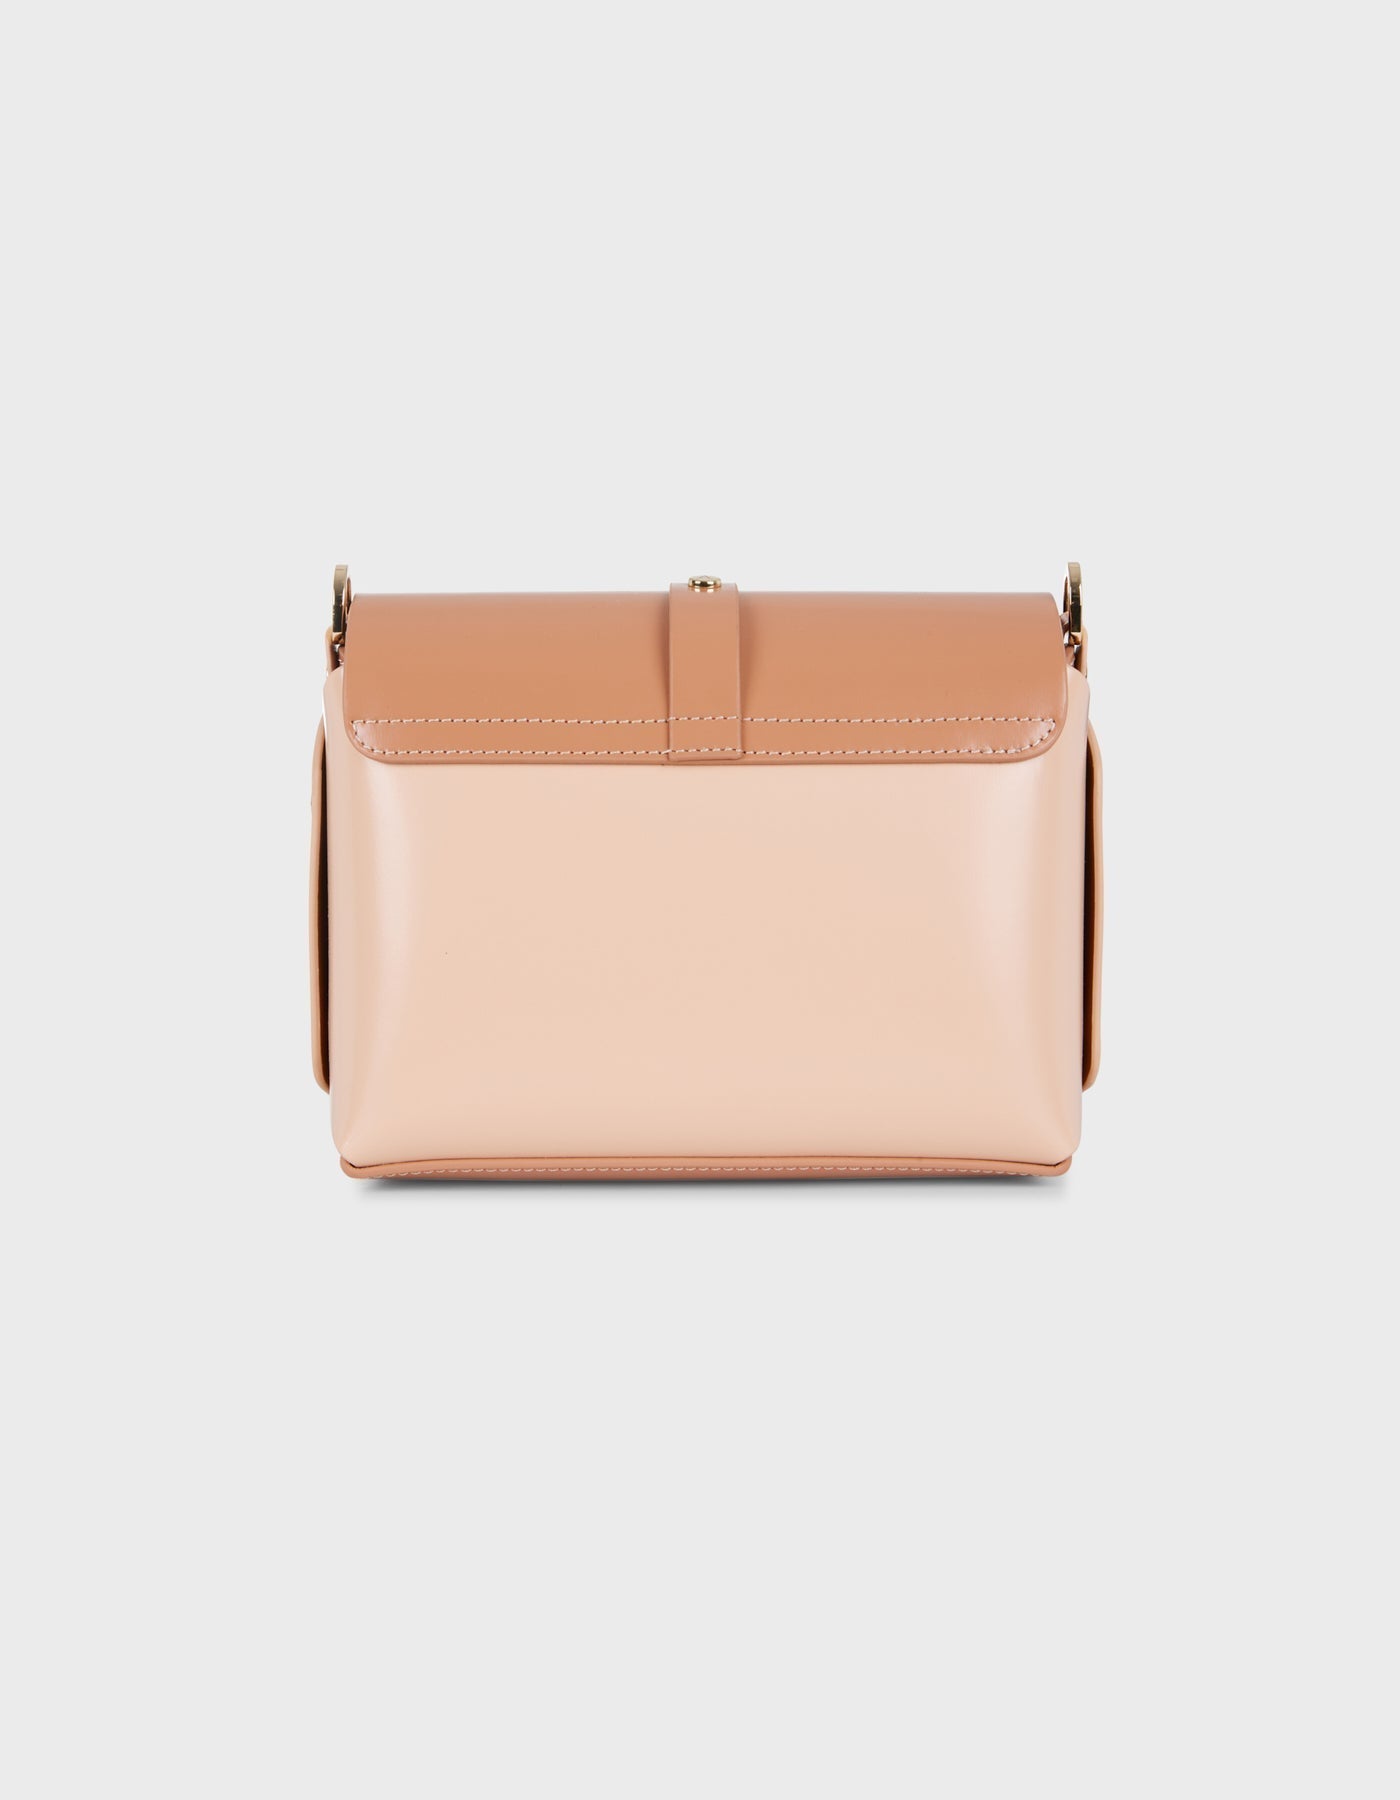 Hiva Atelier | Harmonia Shoulder Bag Peach Sand | Beautiful and Versatile Leather Accessories